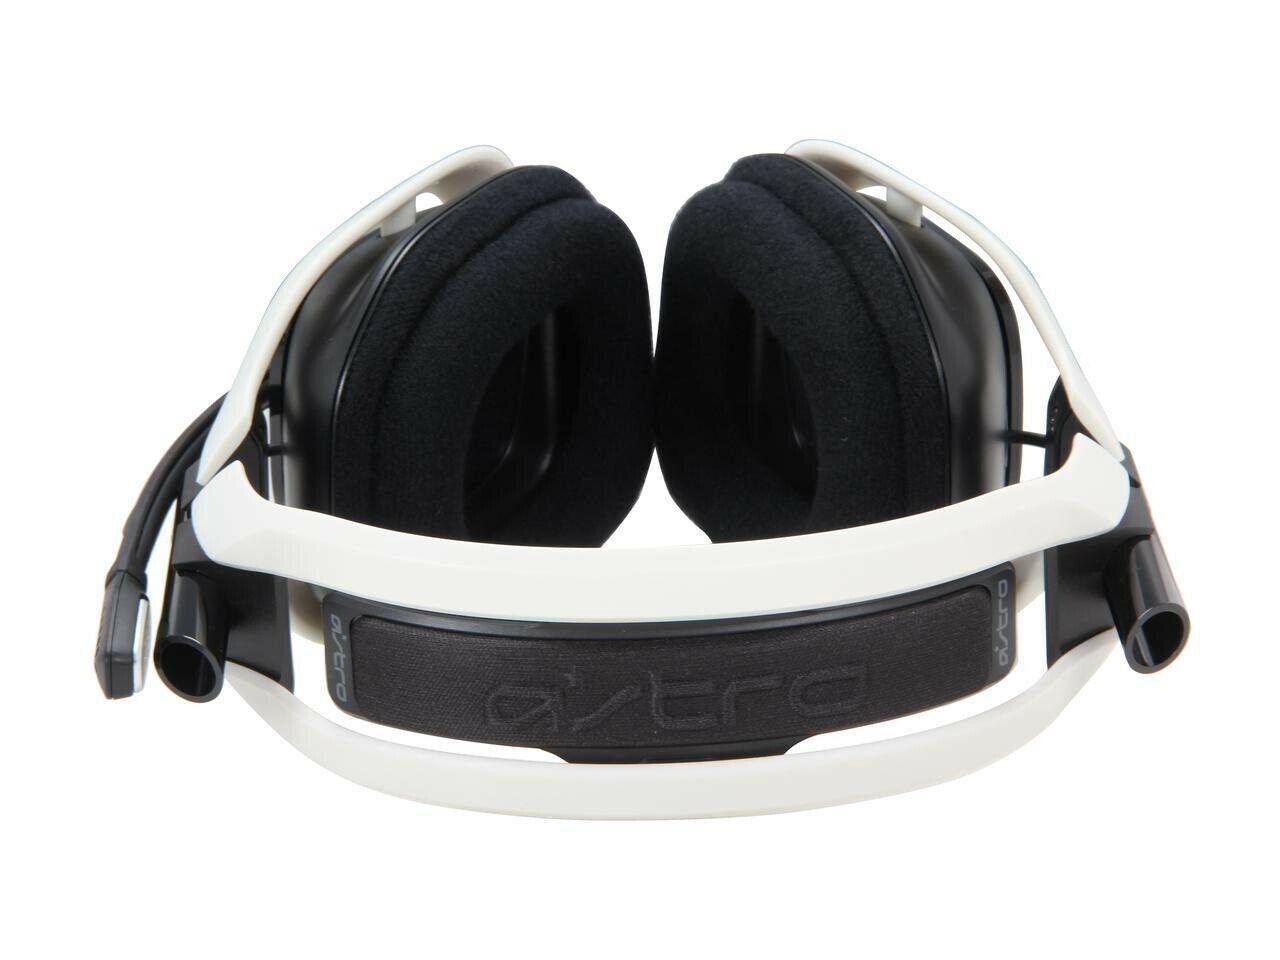 Astro A40 2013 Barebone Headset Only (white & Black) Multi-platform